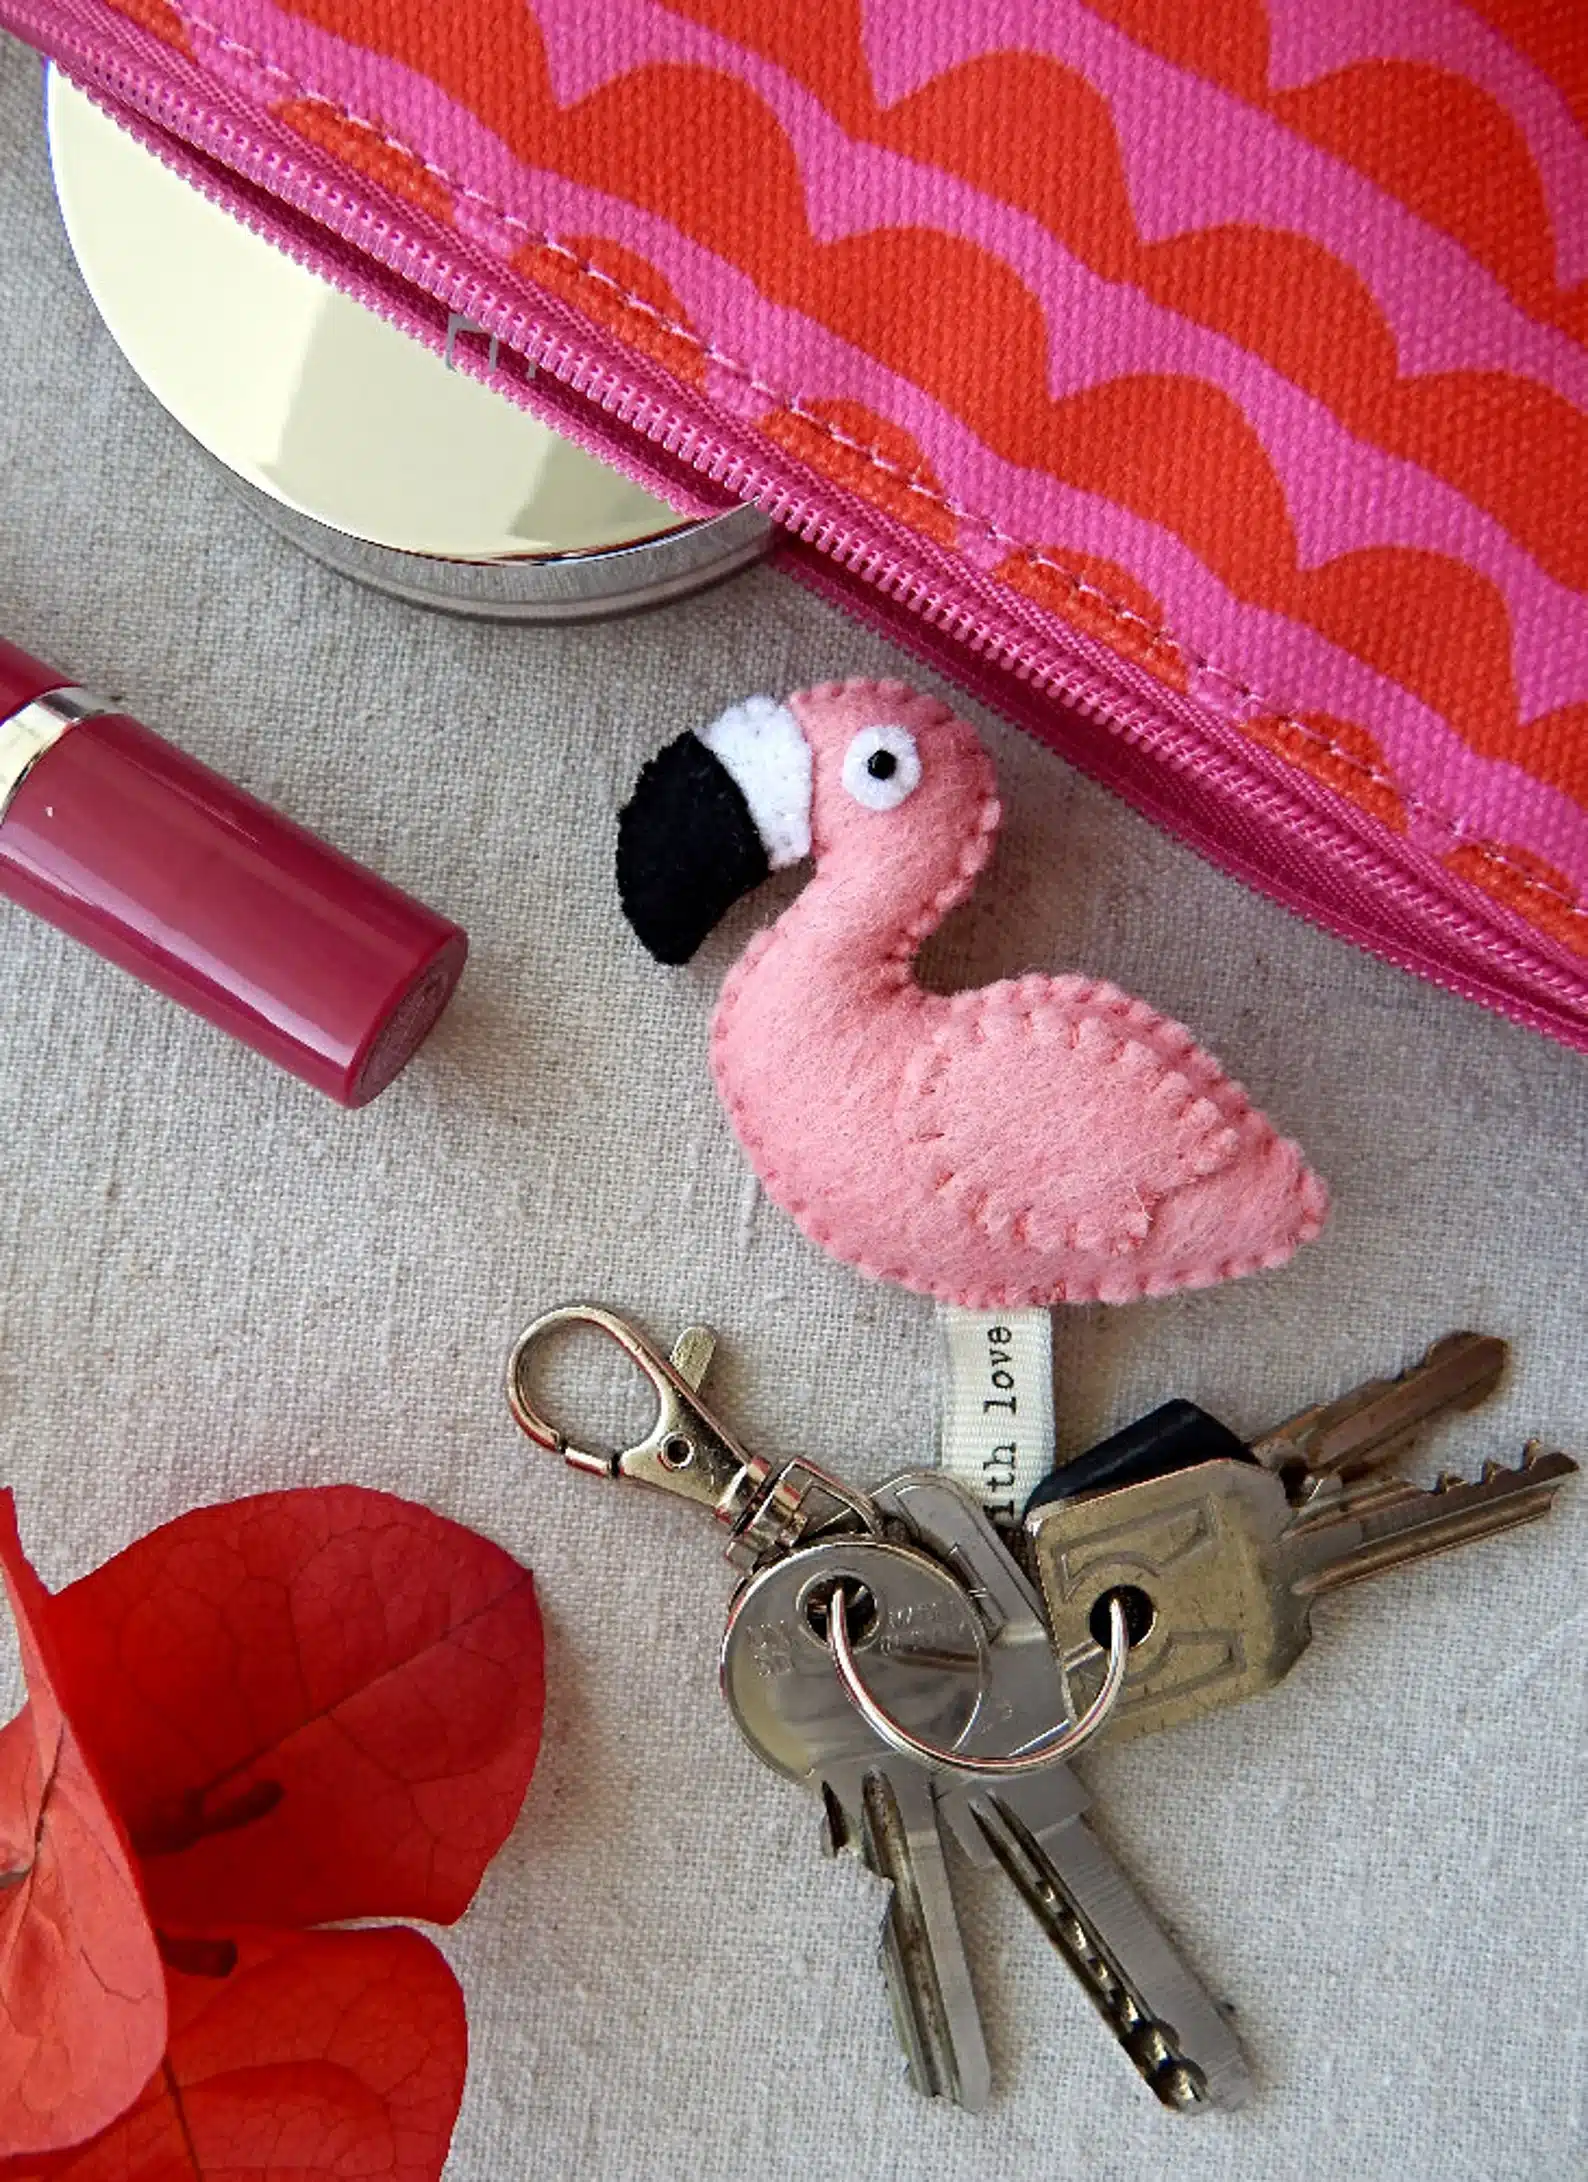 Flamingo Keychain